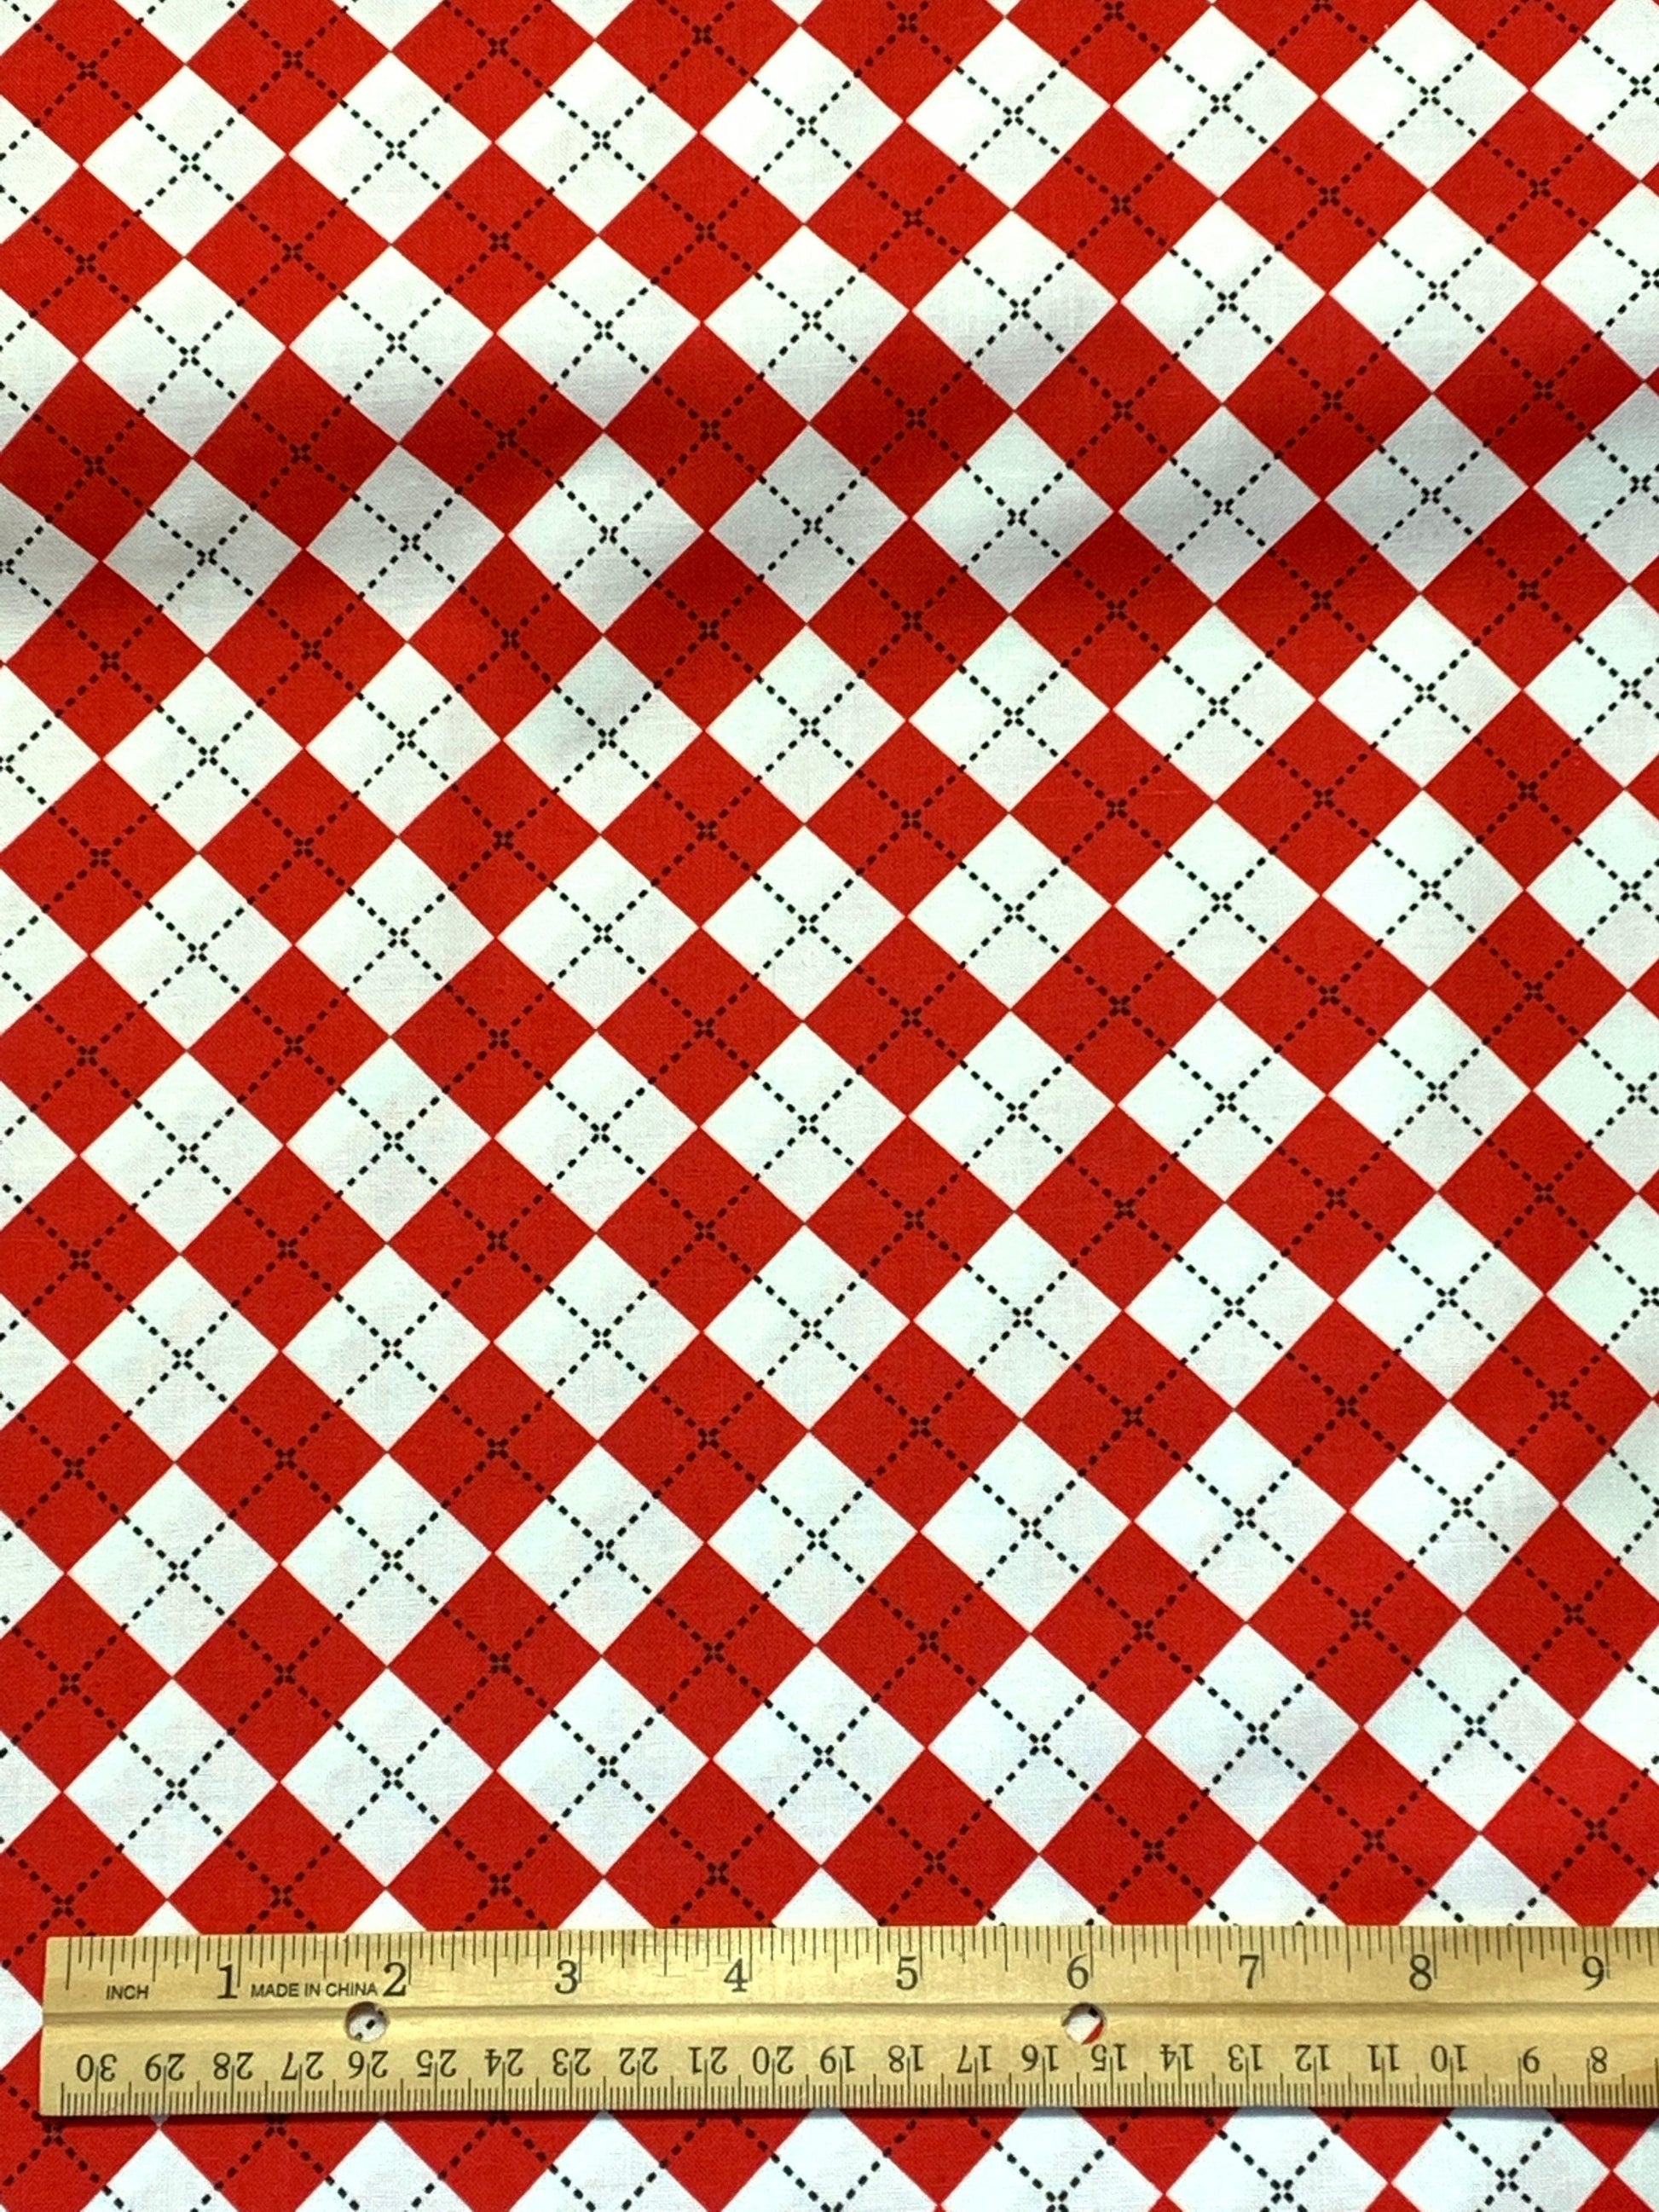 Robert Kaufman Remix AAK-1039-3 Red Red and White argyle print - Robert Kaufman - sewmuchonline